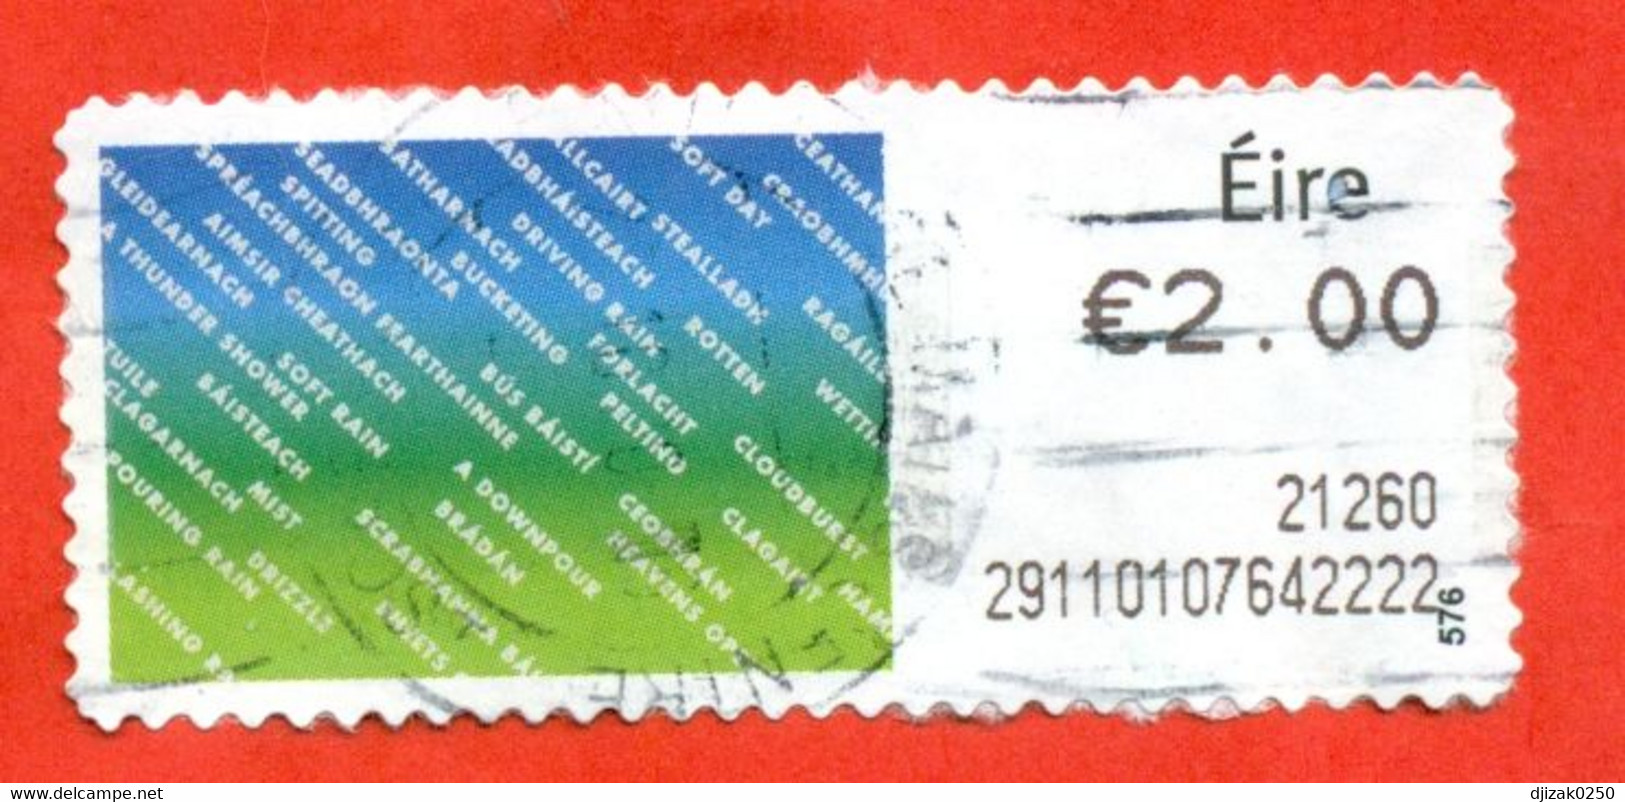 Ireland 2019. Used Stamp. - Frankeervignetten (Frama)